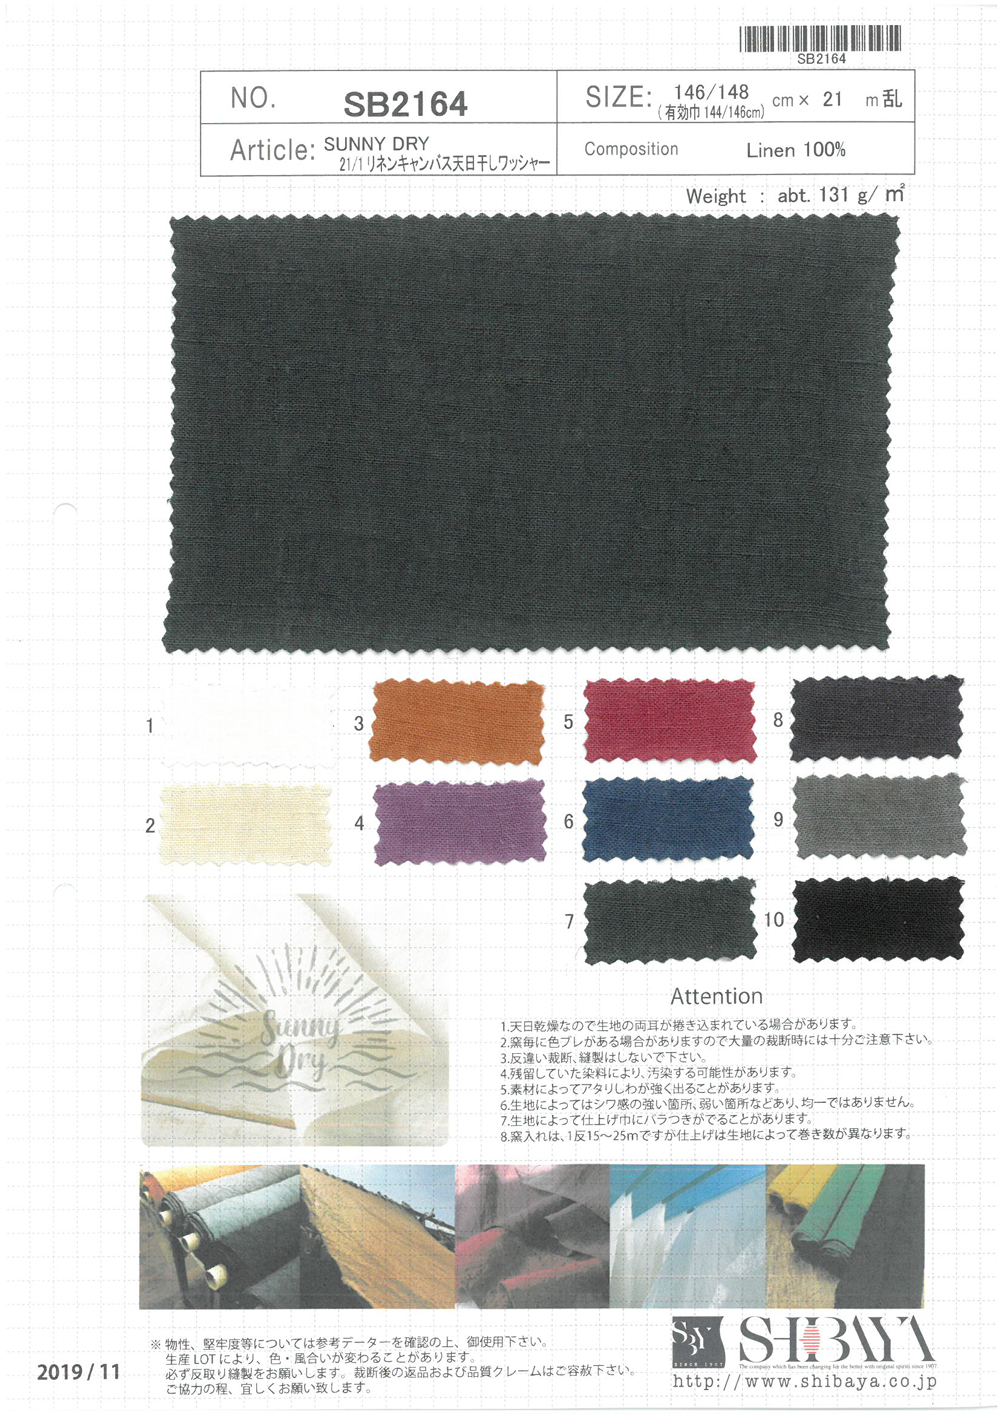 SB2164 SUNNY DRY 21/1 Linen Canvas Sun-dried Washer Processing[Textile / Fabric] SHIBAYA